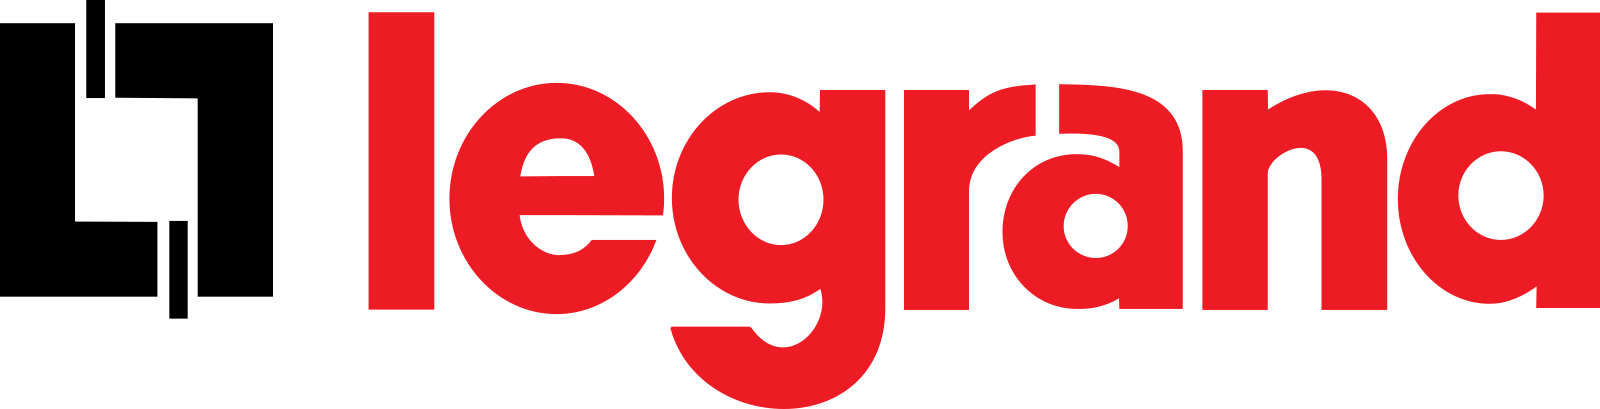 legrand-logo-2